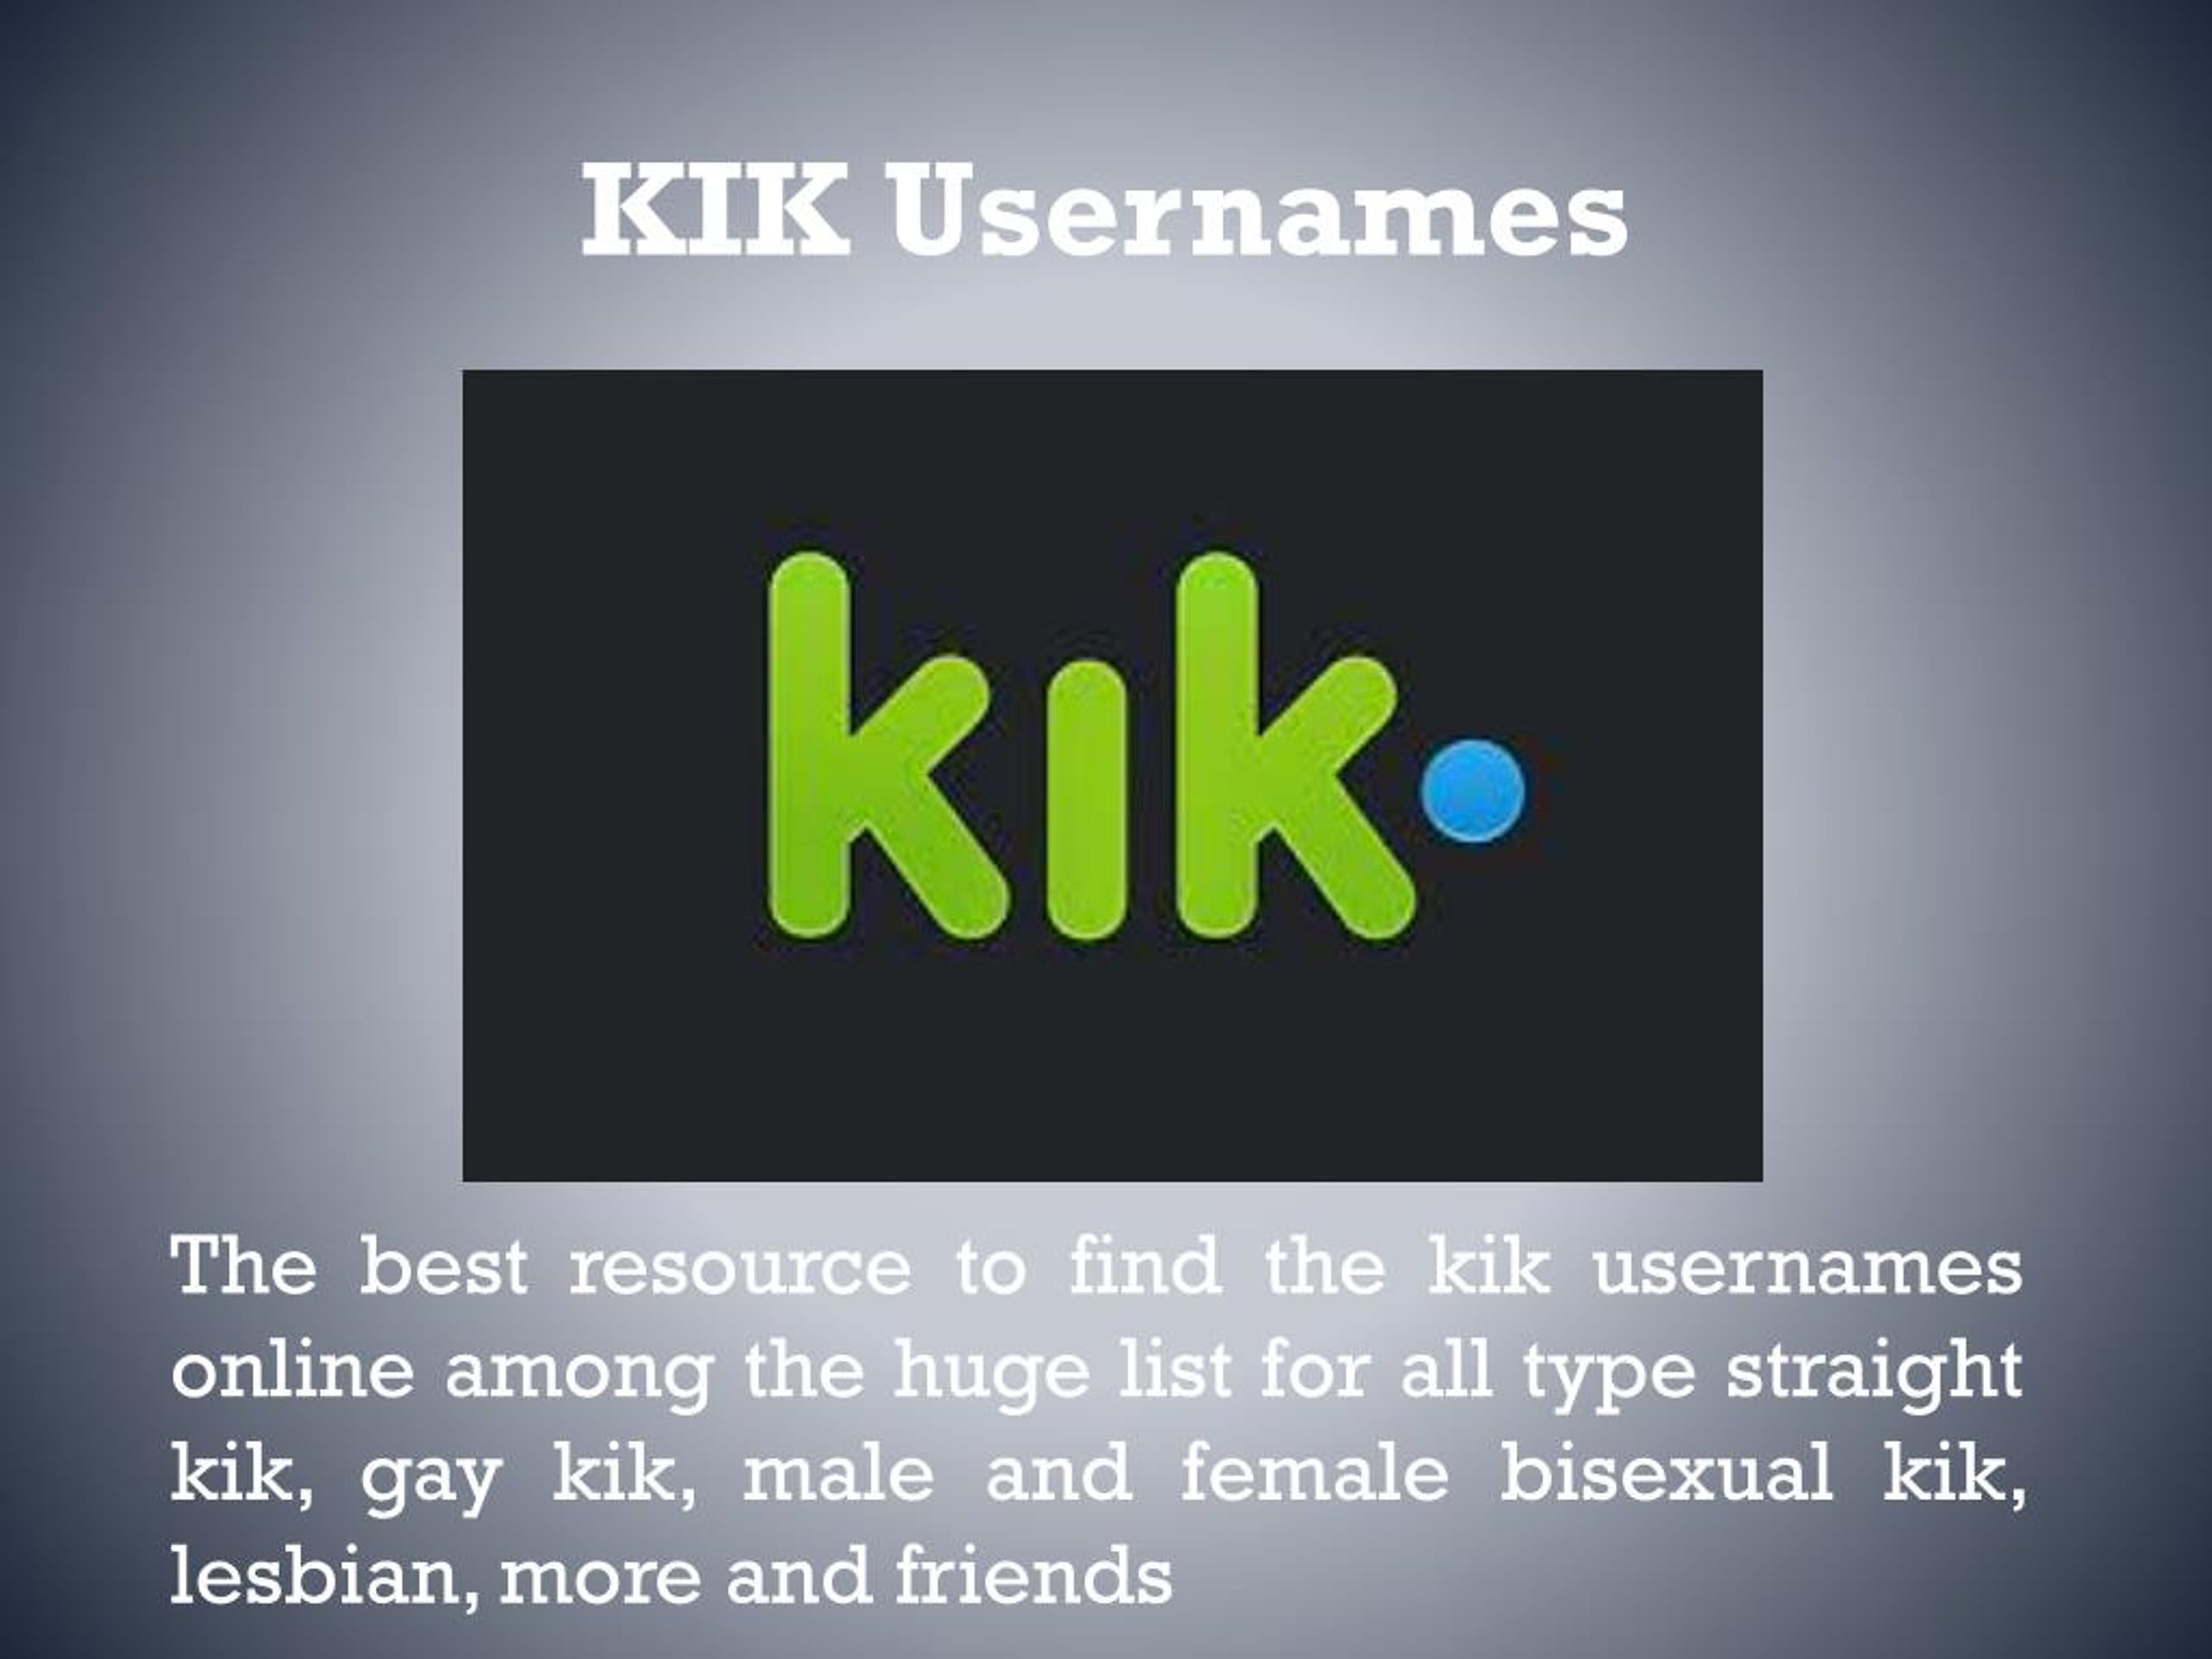 the kik usernames online among the huge list for all type straight kik, gay ...